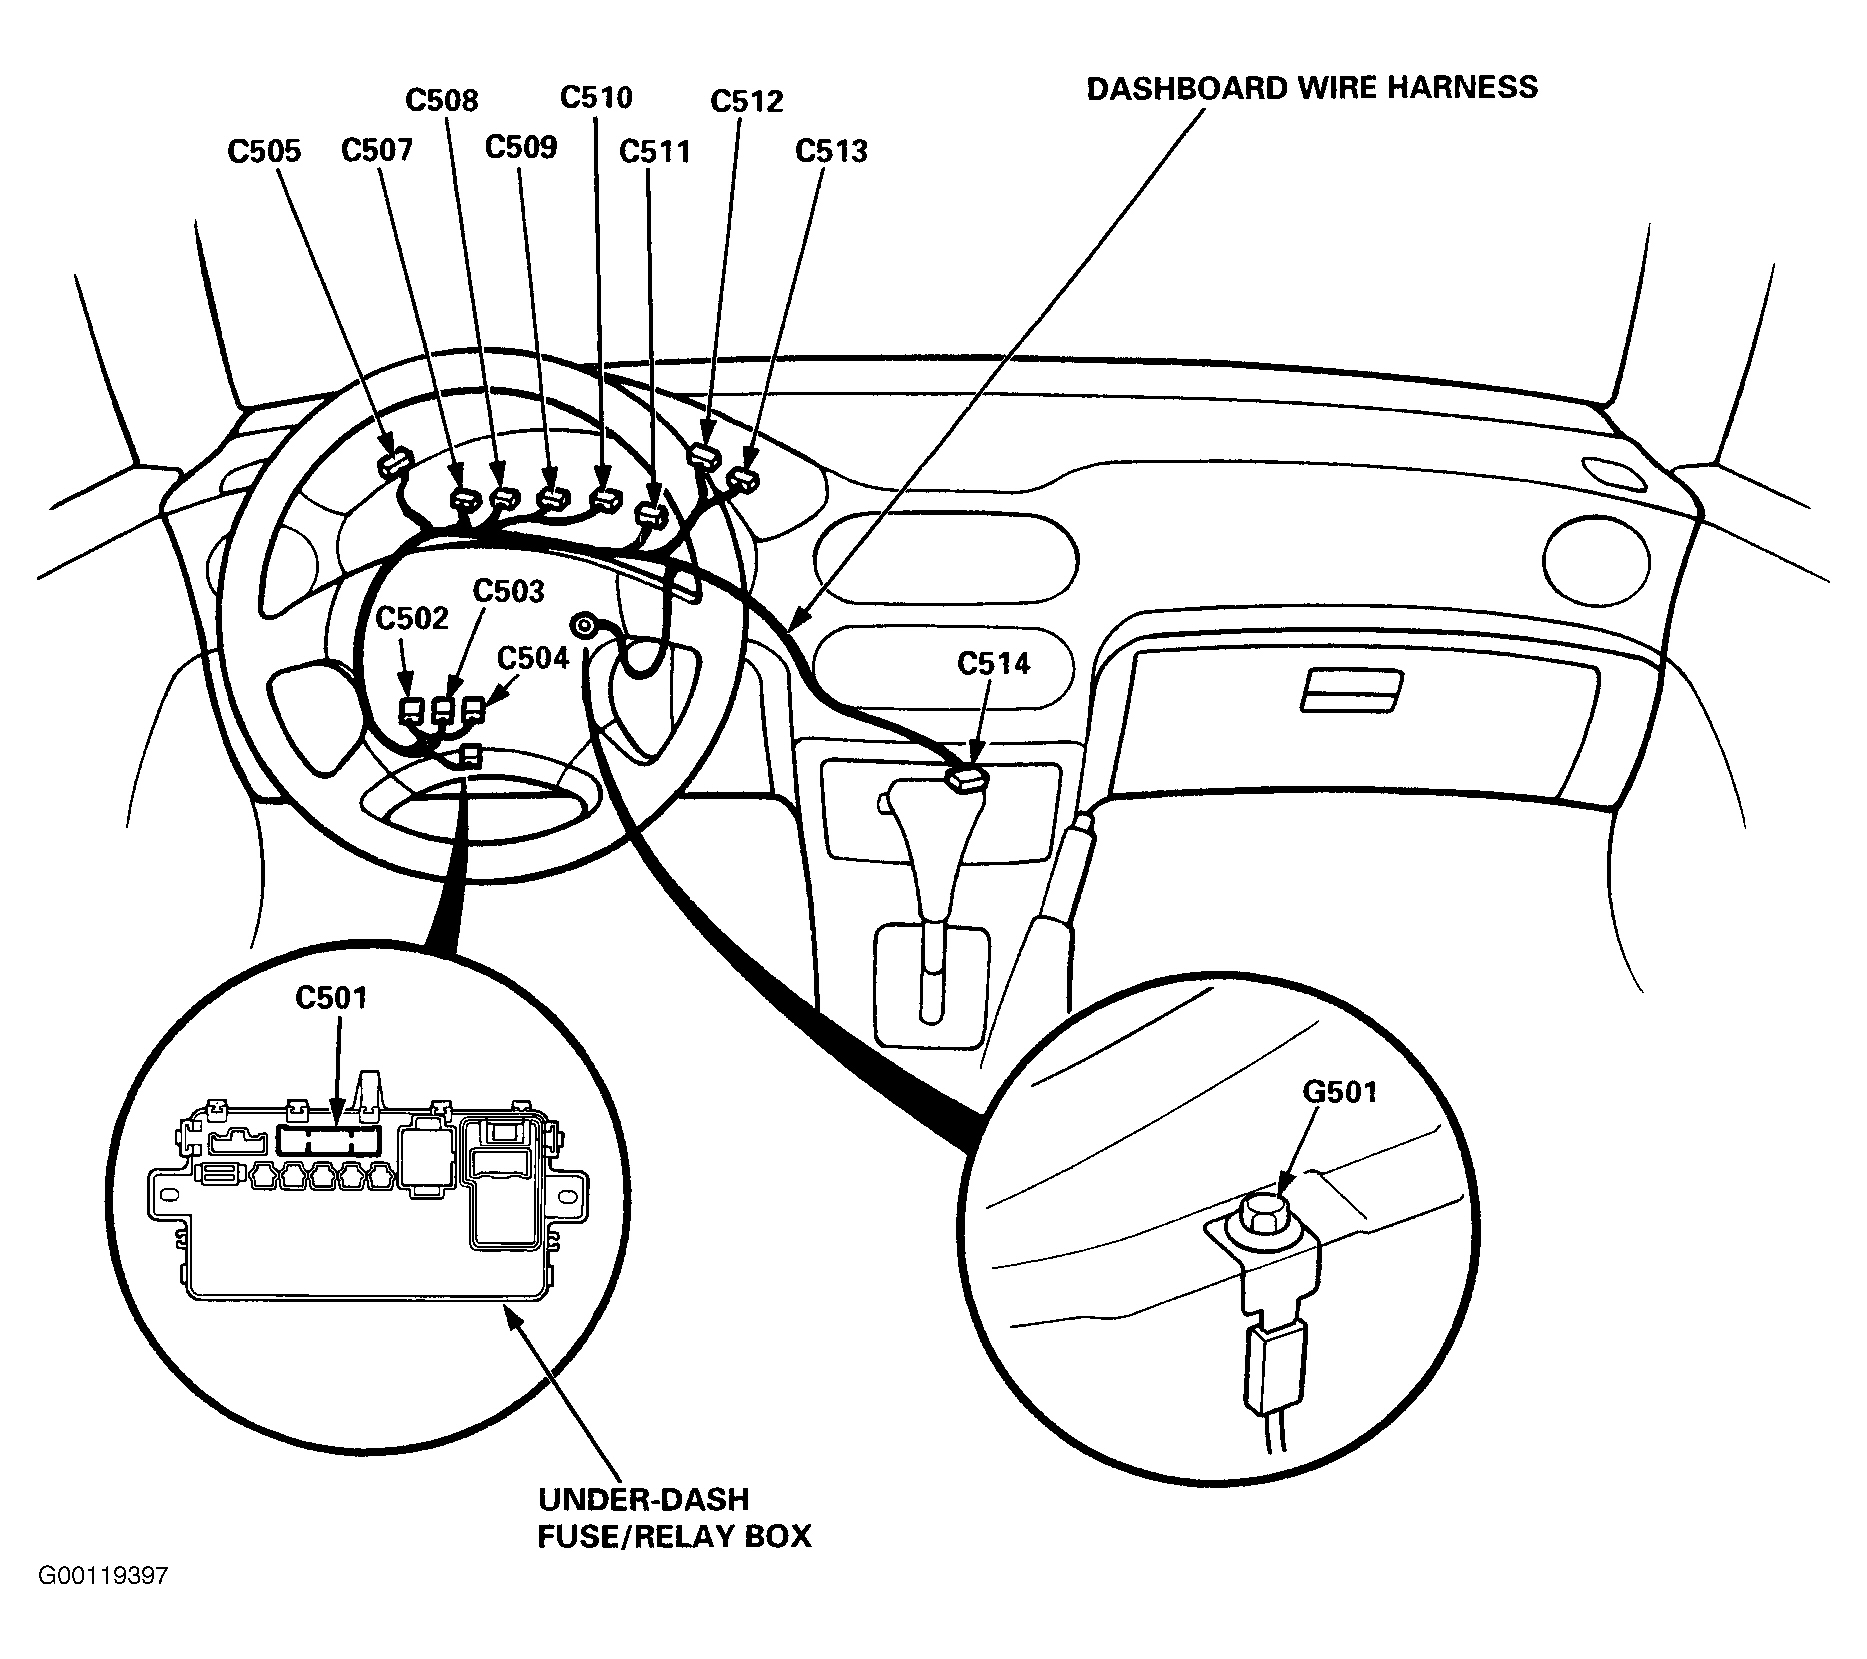 Honda Civic del Sol S 1996 - Component Locations -  Locating Under-Dash Fuse/Relay Box